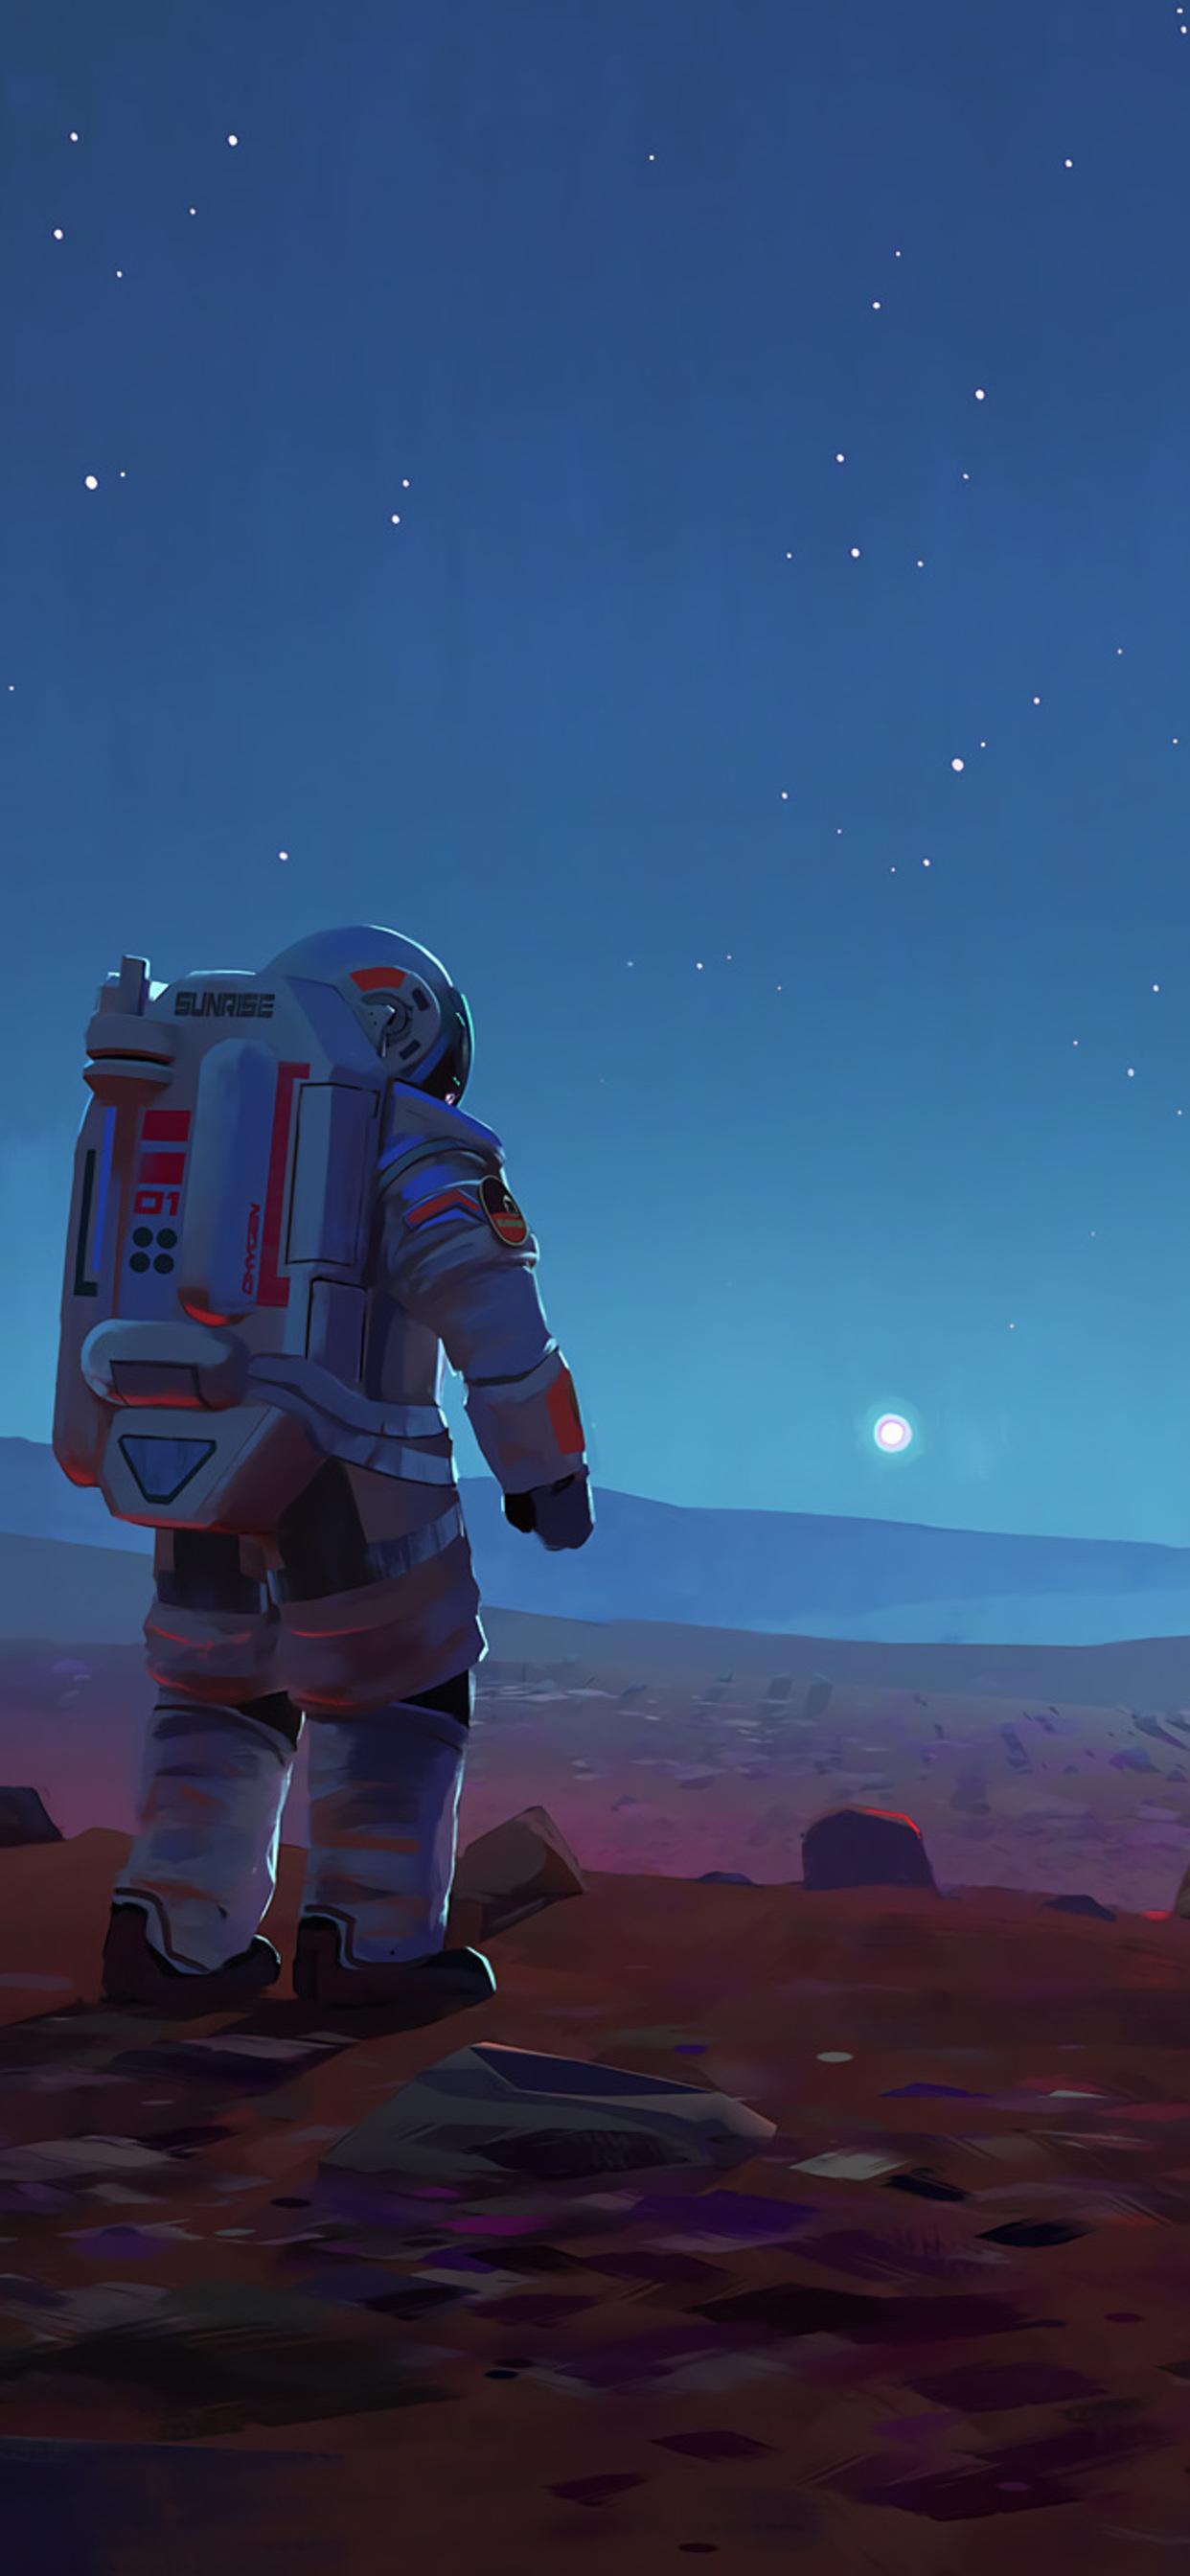 Astronaut on Mars, looking at the stars - Mars